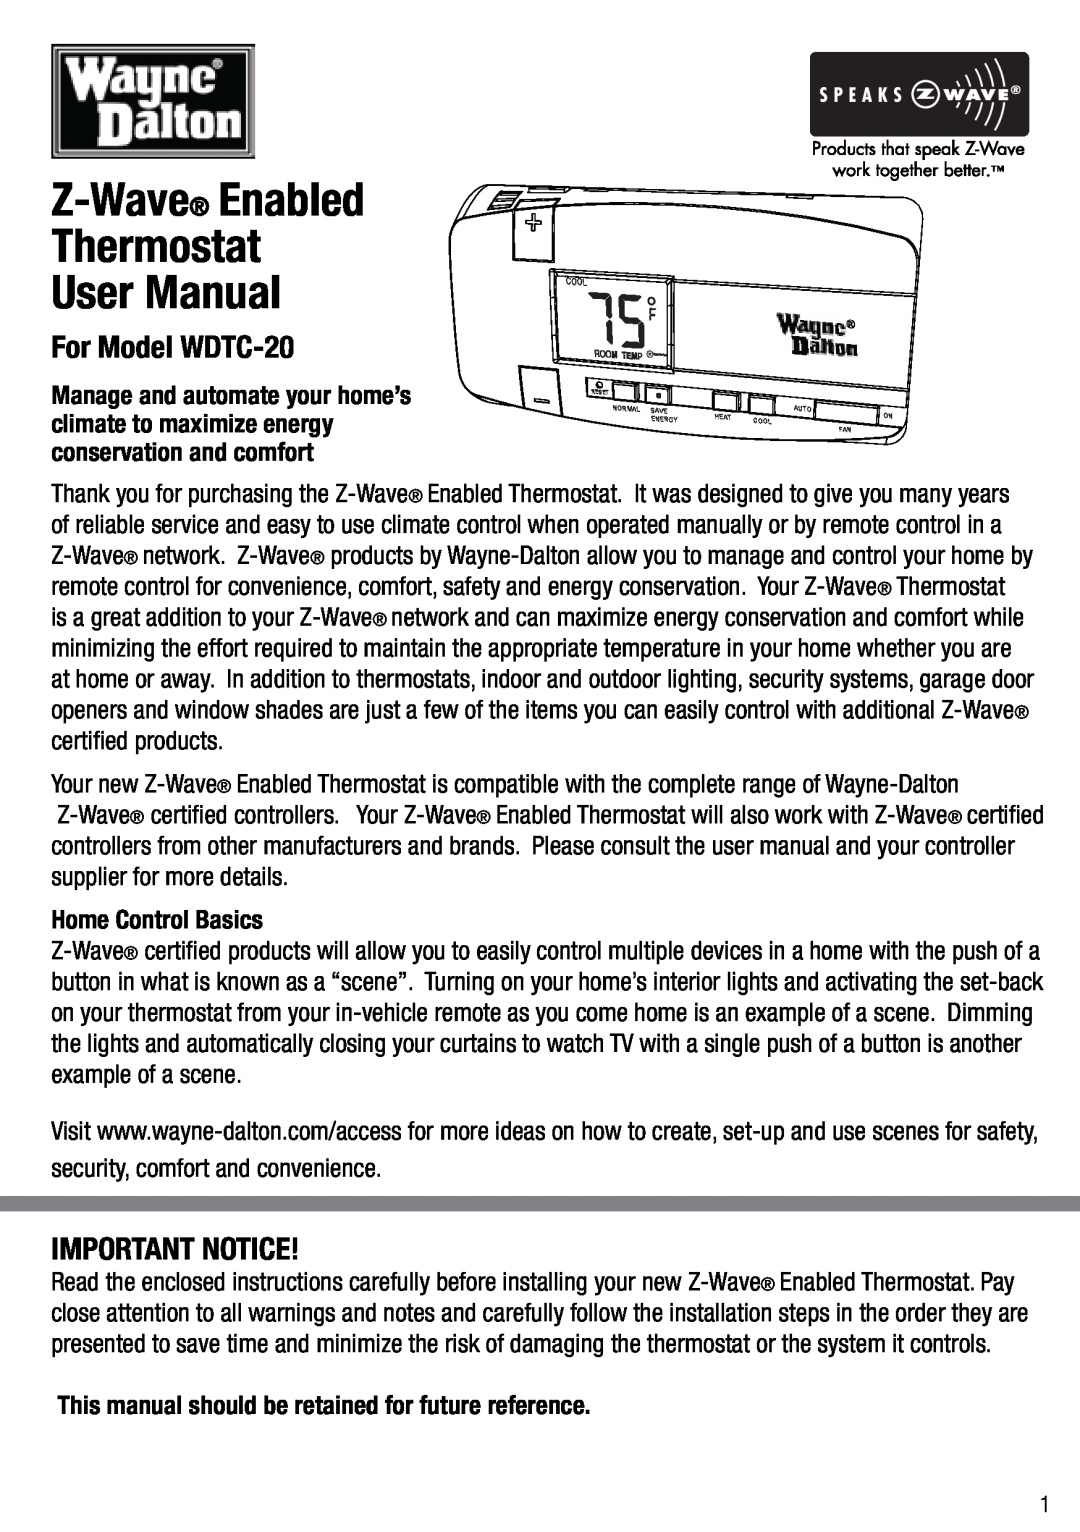 Wayne-Dalton user manual For Model WDTC-20, Important Notice 